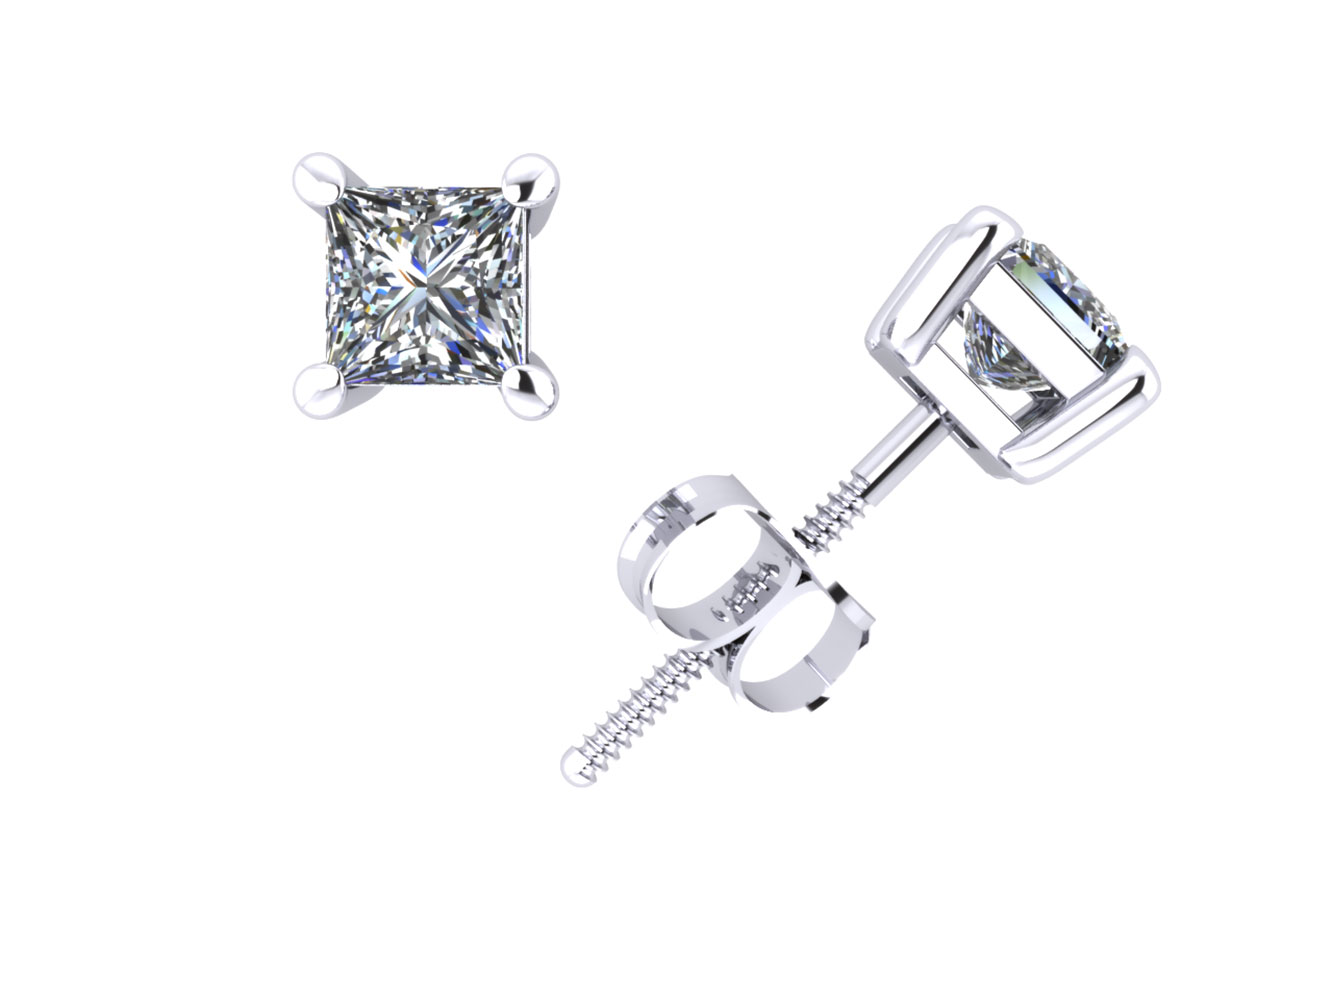 Jewel We Sell 2/5Ct Princess Cut Diamond Basket Stud Earrings 14k White or Yellow Gold 4Prong Screwback GH I1